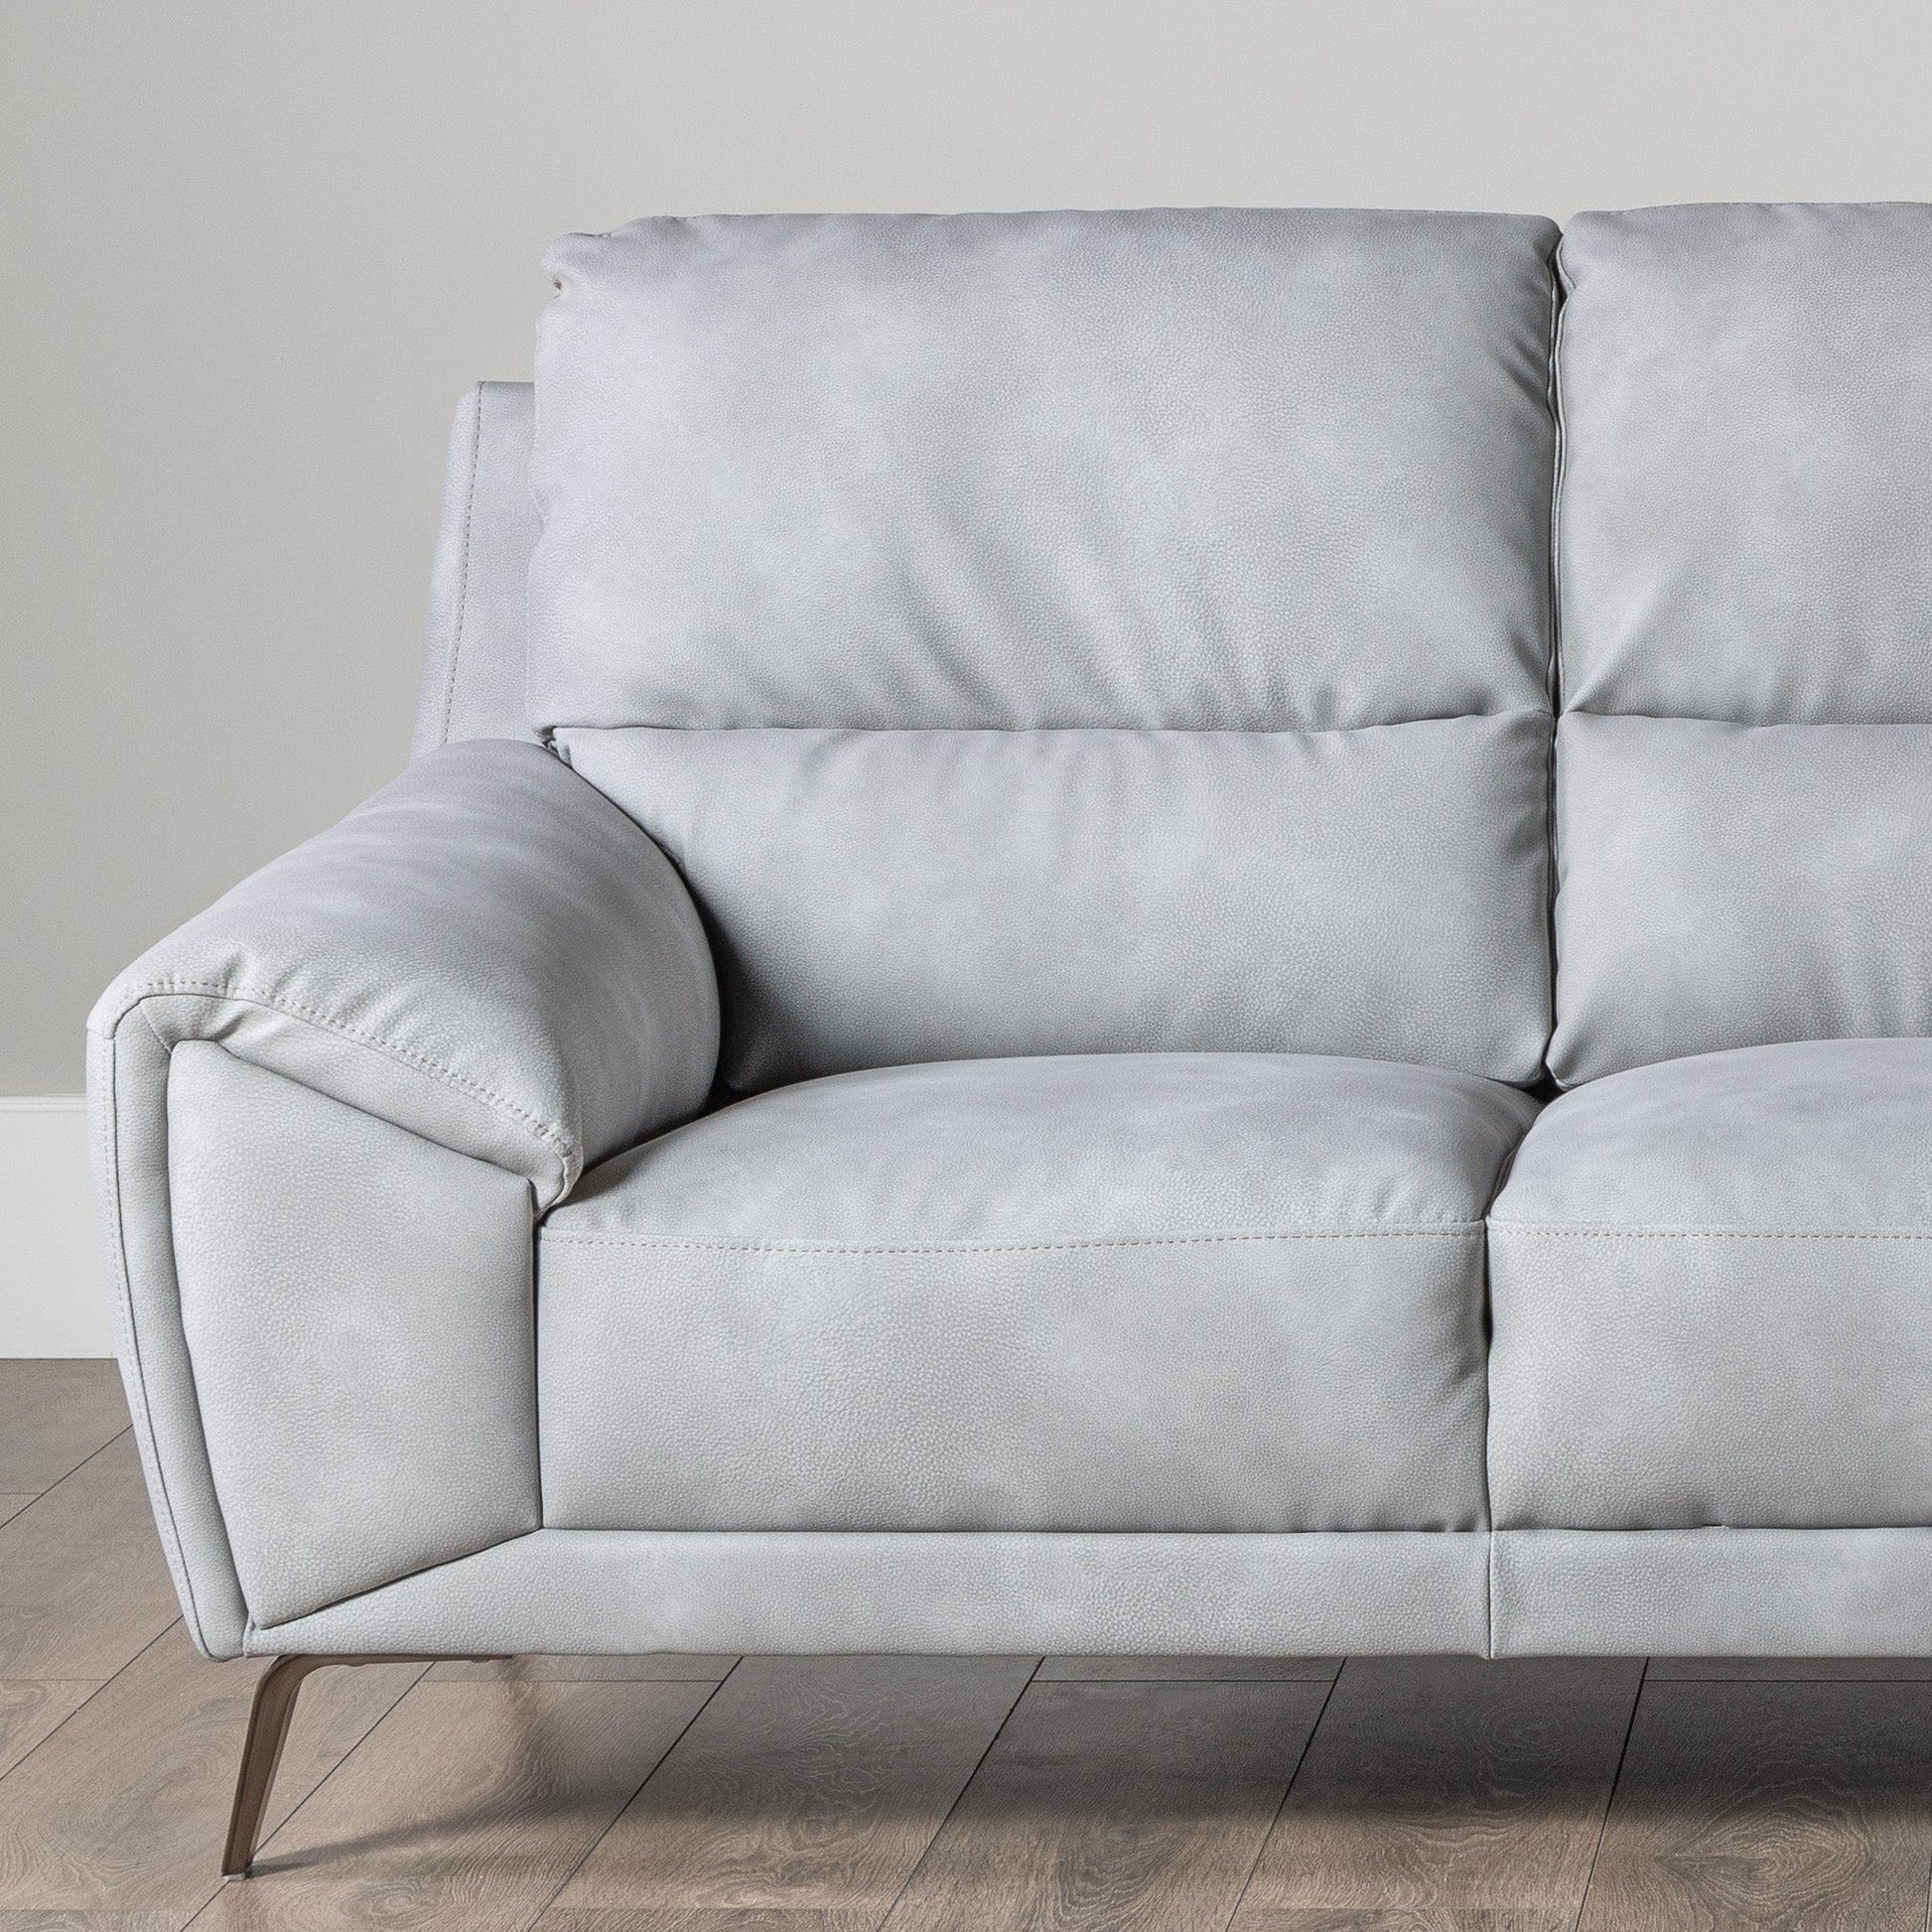 Furniture  -  Lyon Silver 3 Seater Sofa  -  60001374